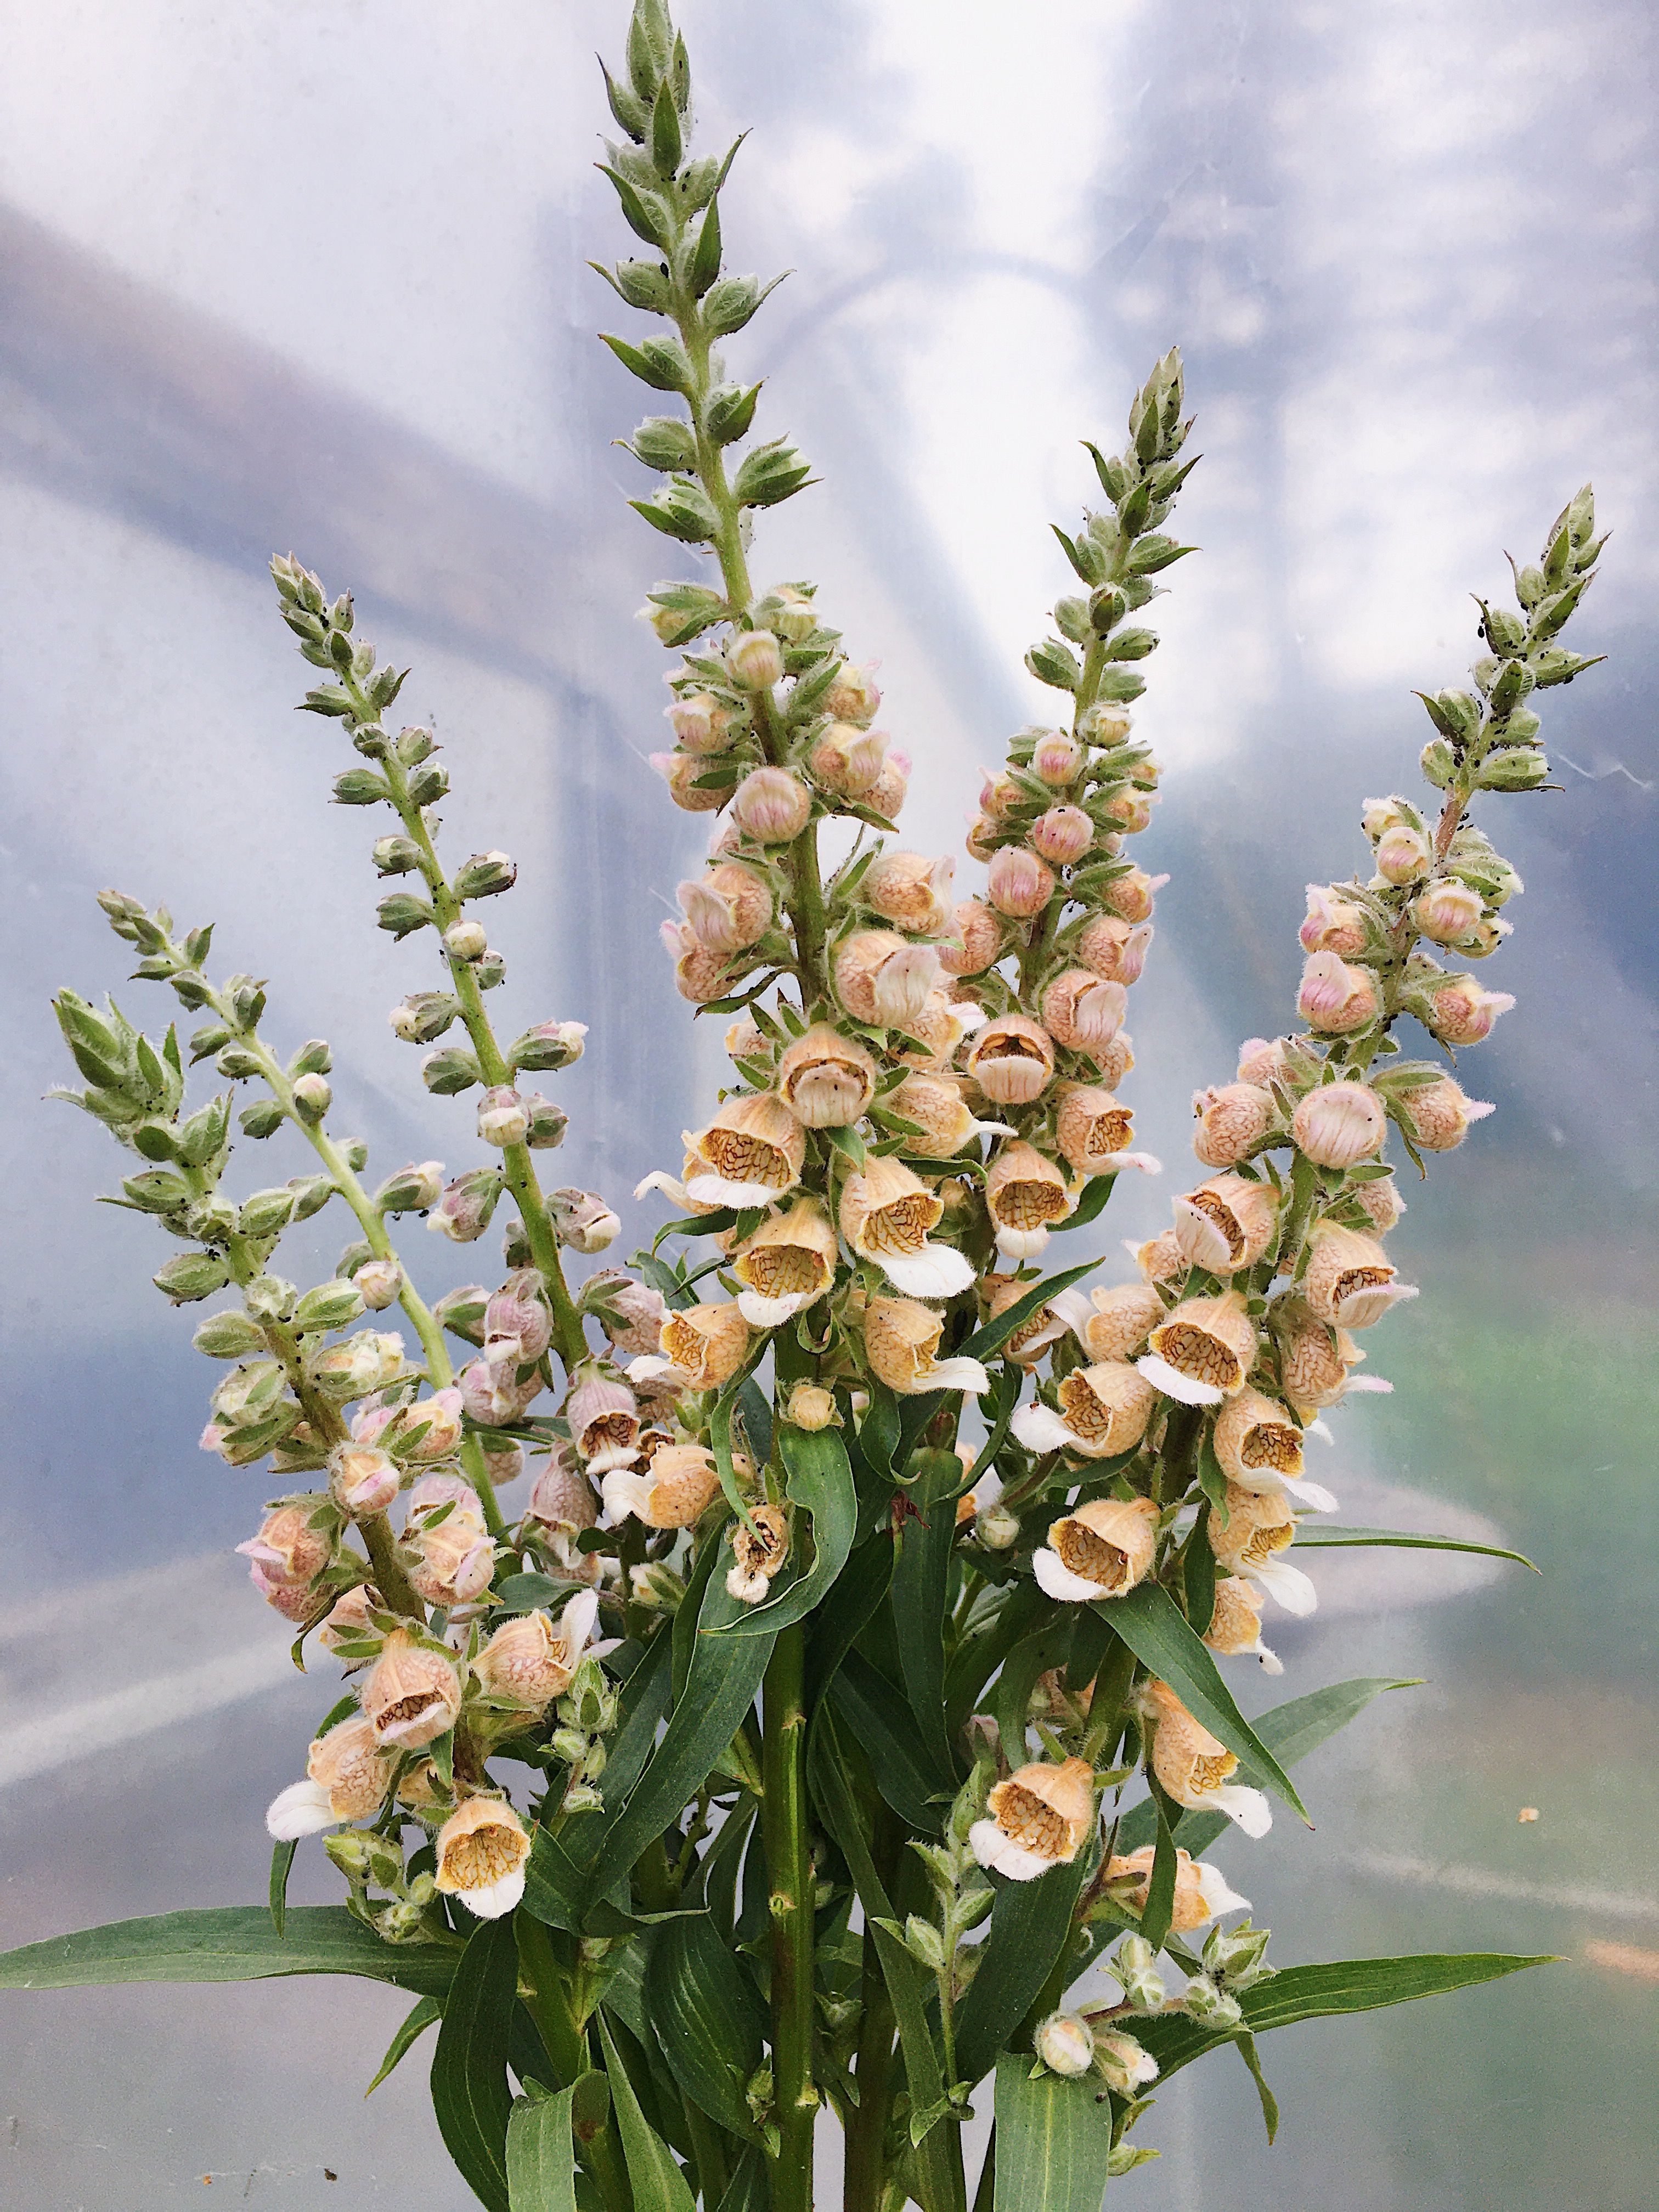 Growing Foxglove: Digitalis Cafe Creme at Love 'n Fresh Flowers